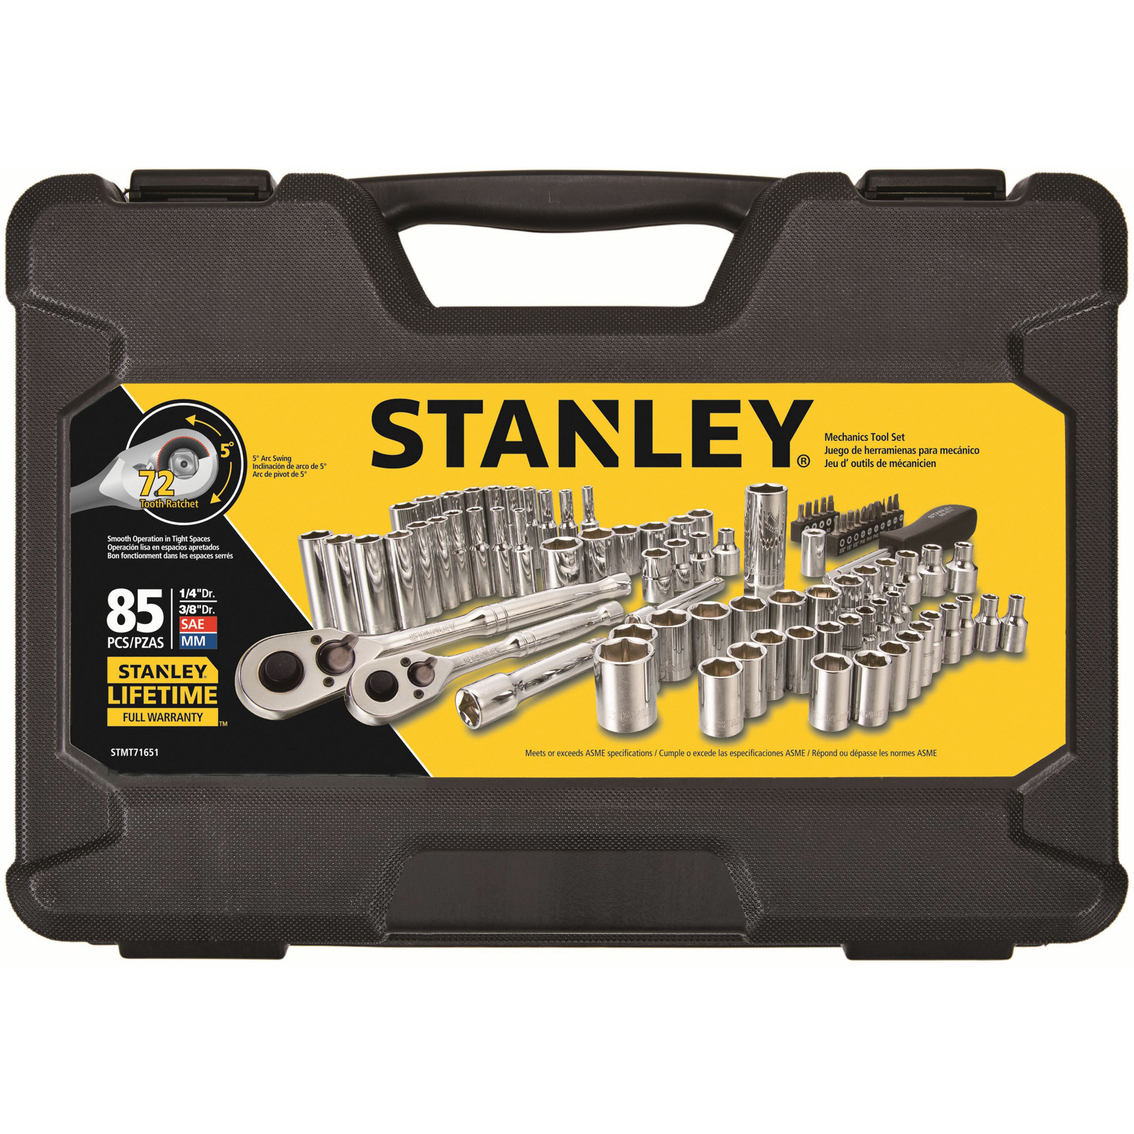 Stanley Spanner Tools, Warranty: 1 Year